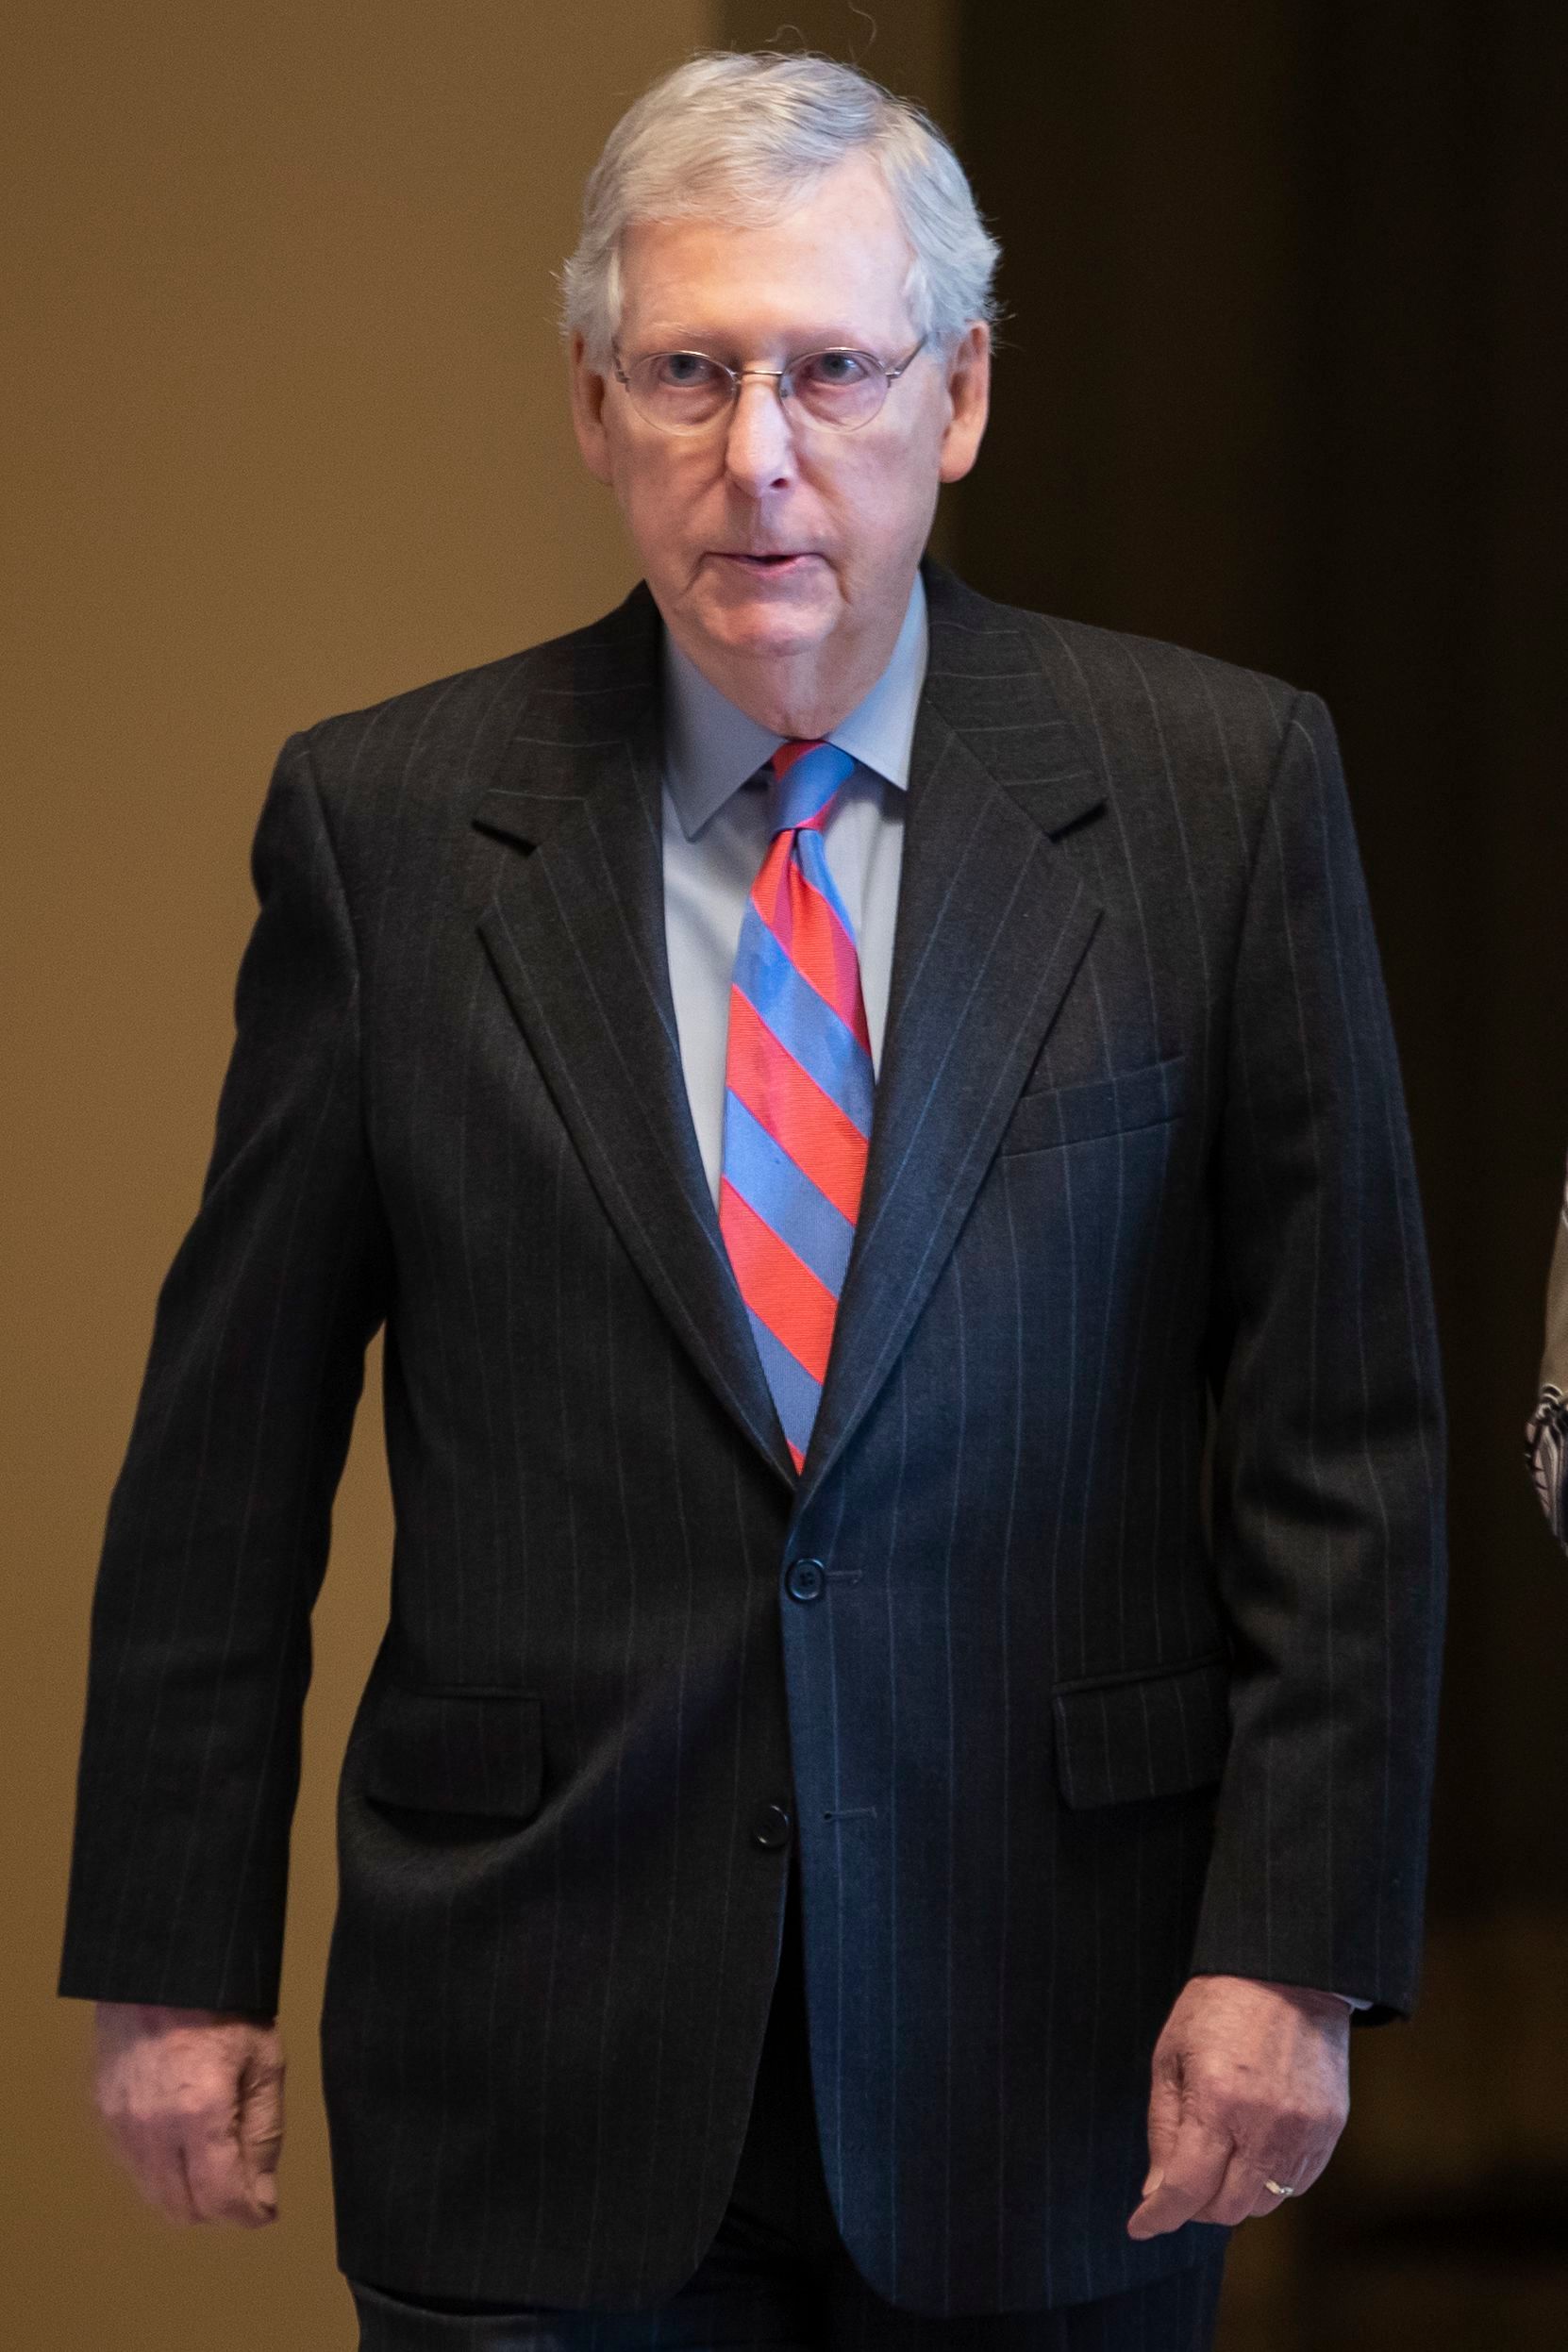 PHOTO: Senate Majority Leader Mitch McConnell walks onto the Senate floor at the Capitol, Feb. 14, 2019. 